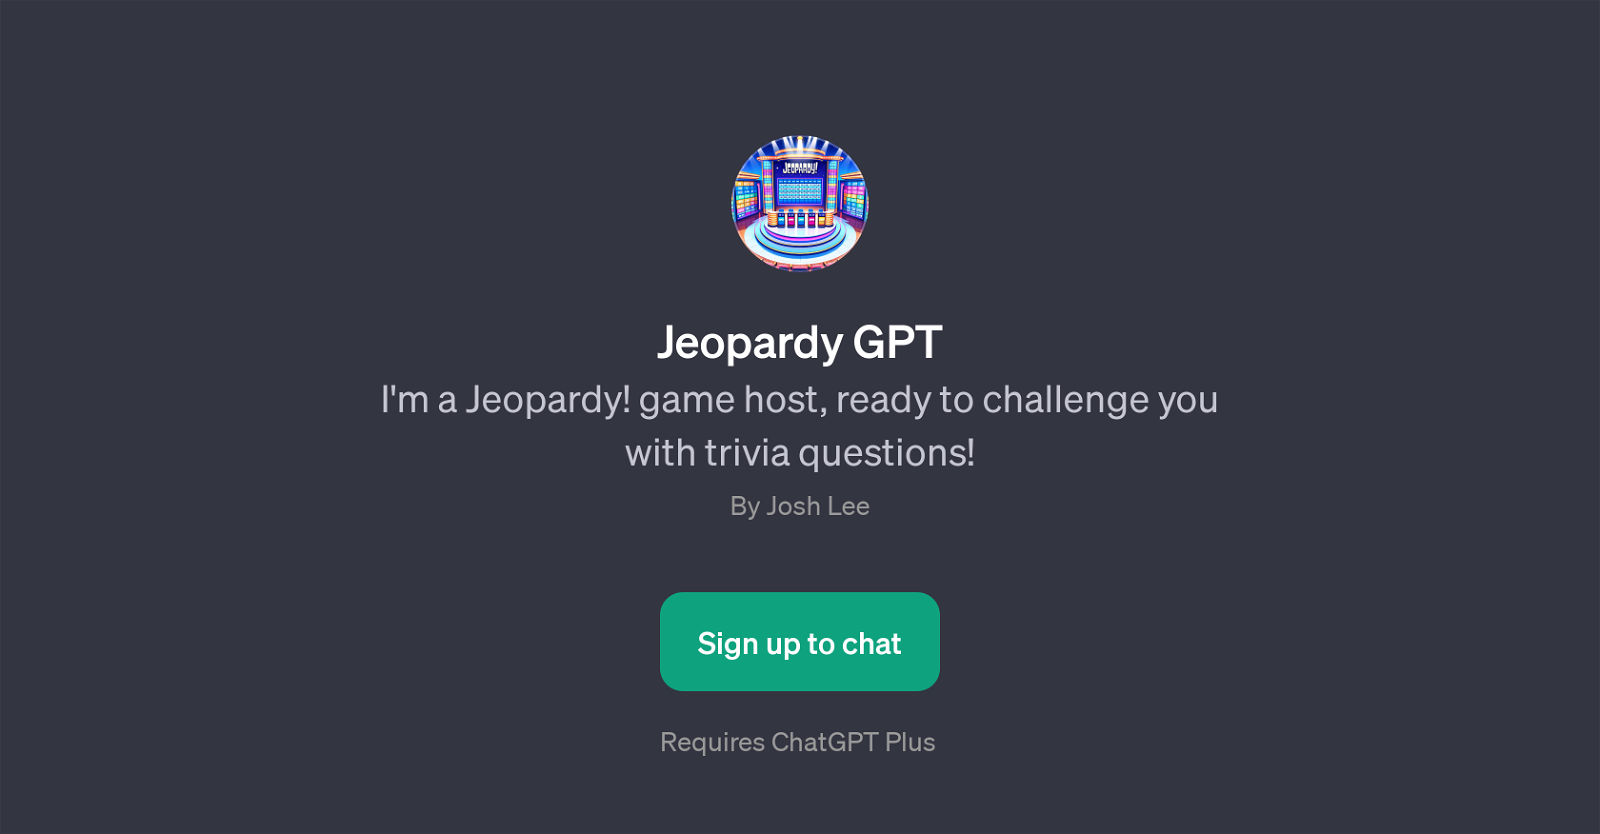 Jeopardy GPT website